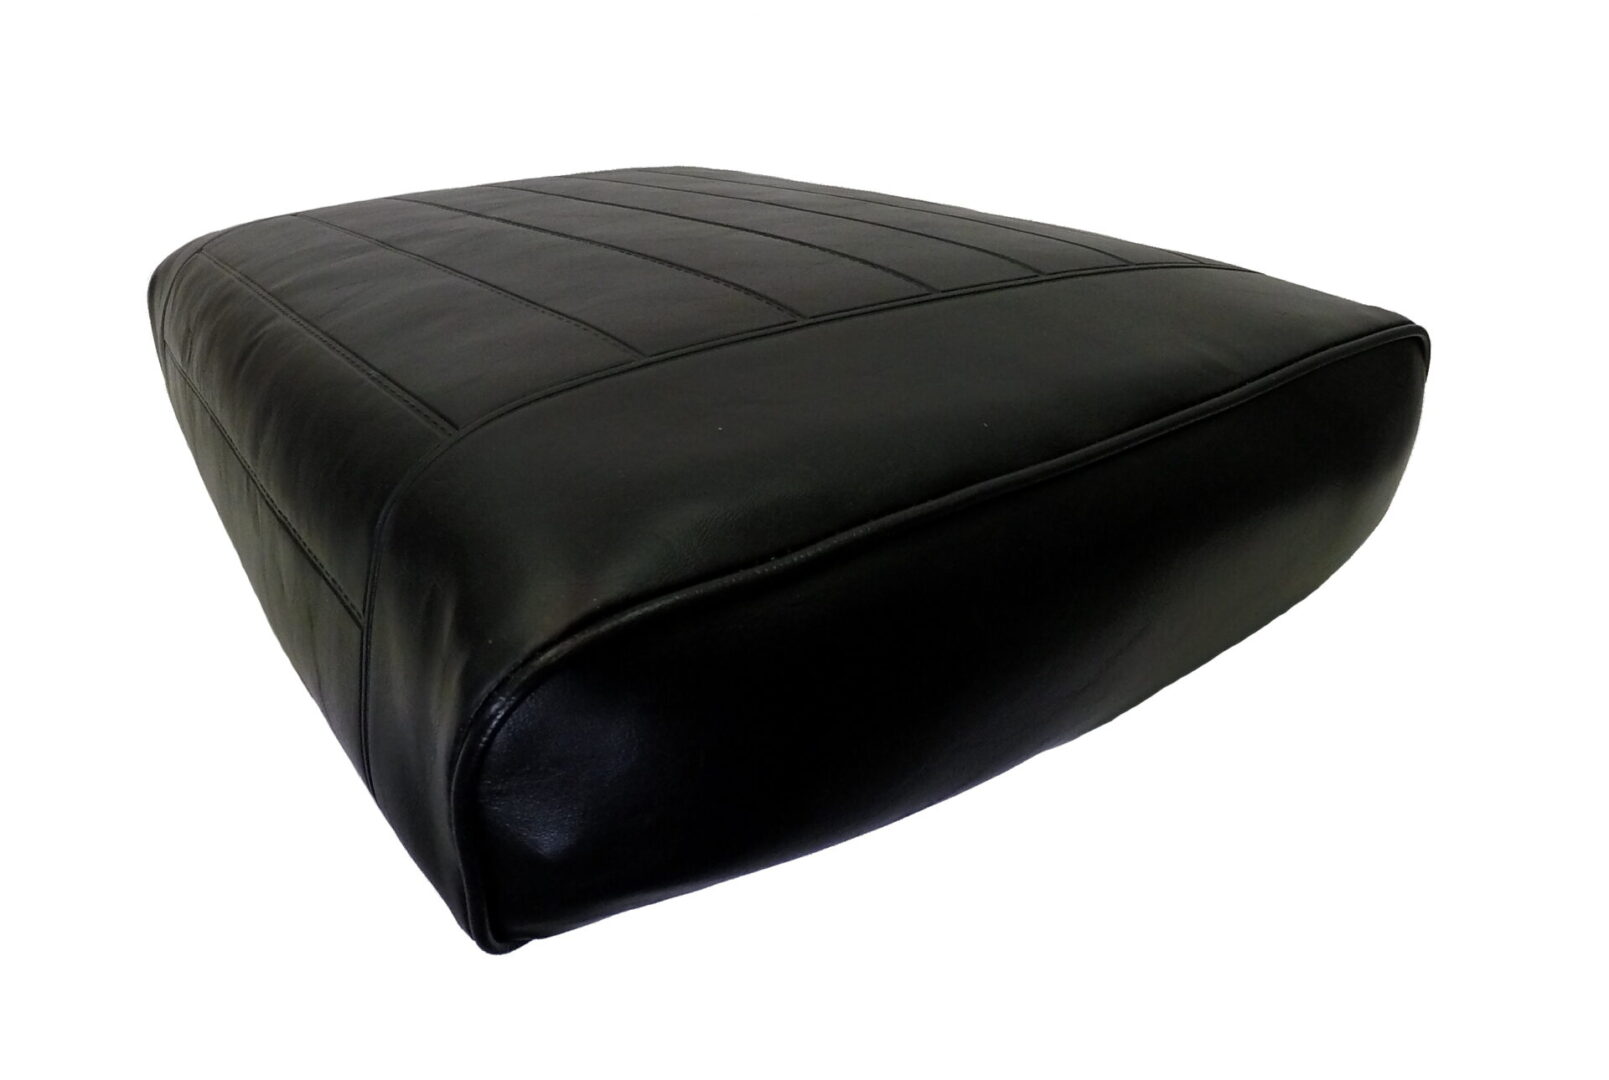 CCS DLX BTM FRT CRN - Comfy Coil Deluxe Bottom Cushion